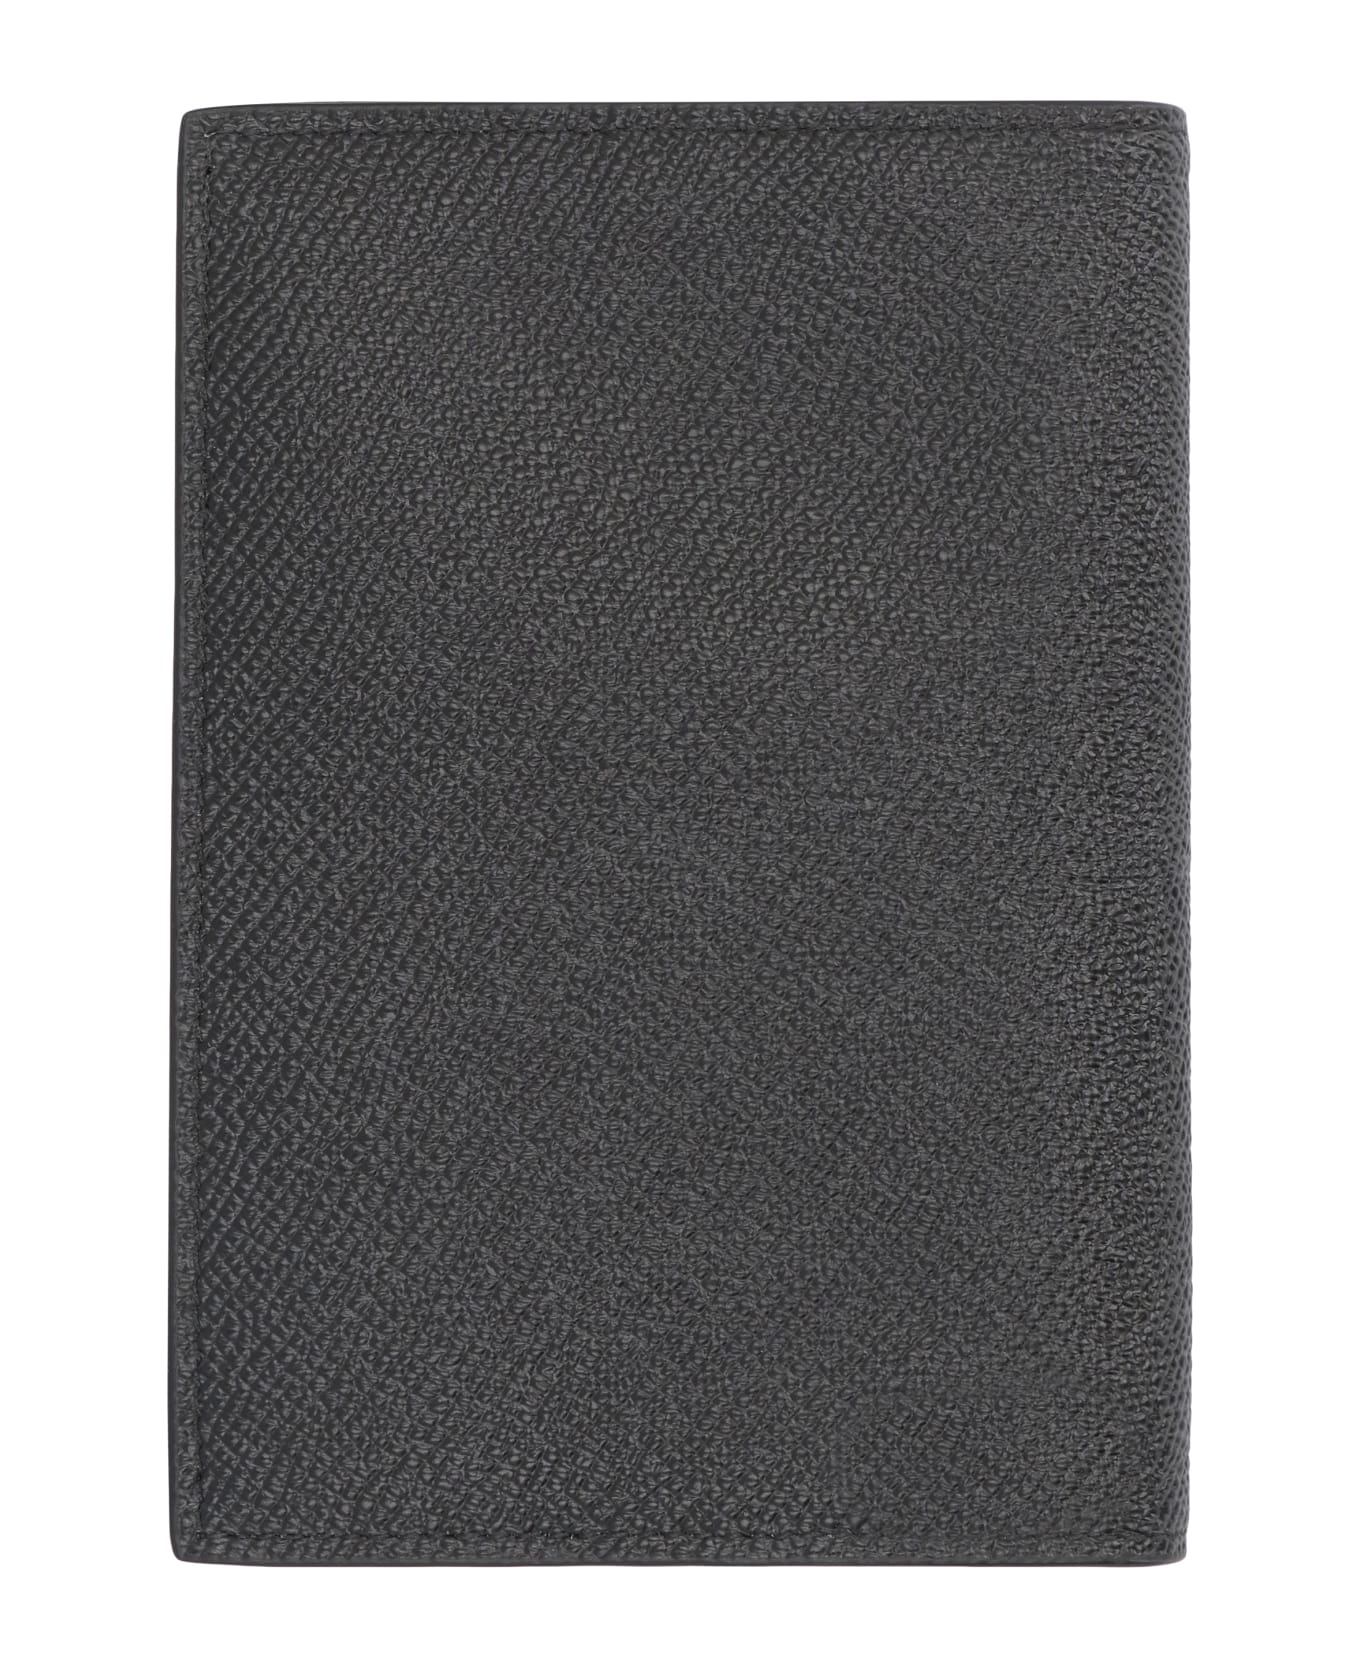 Dolce & Gabbana Leather Passport Holder - black